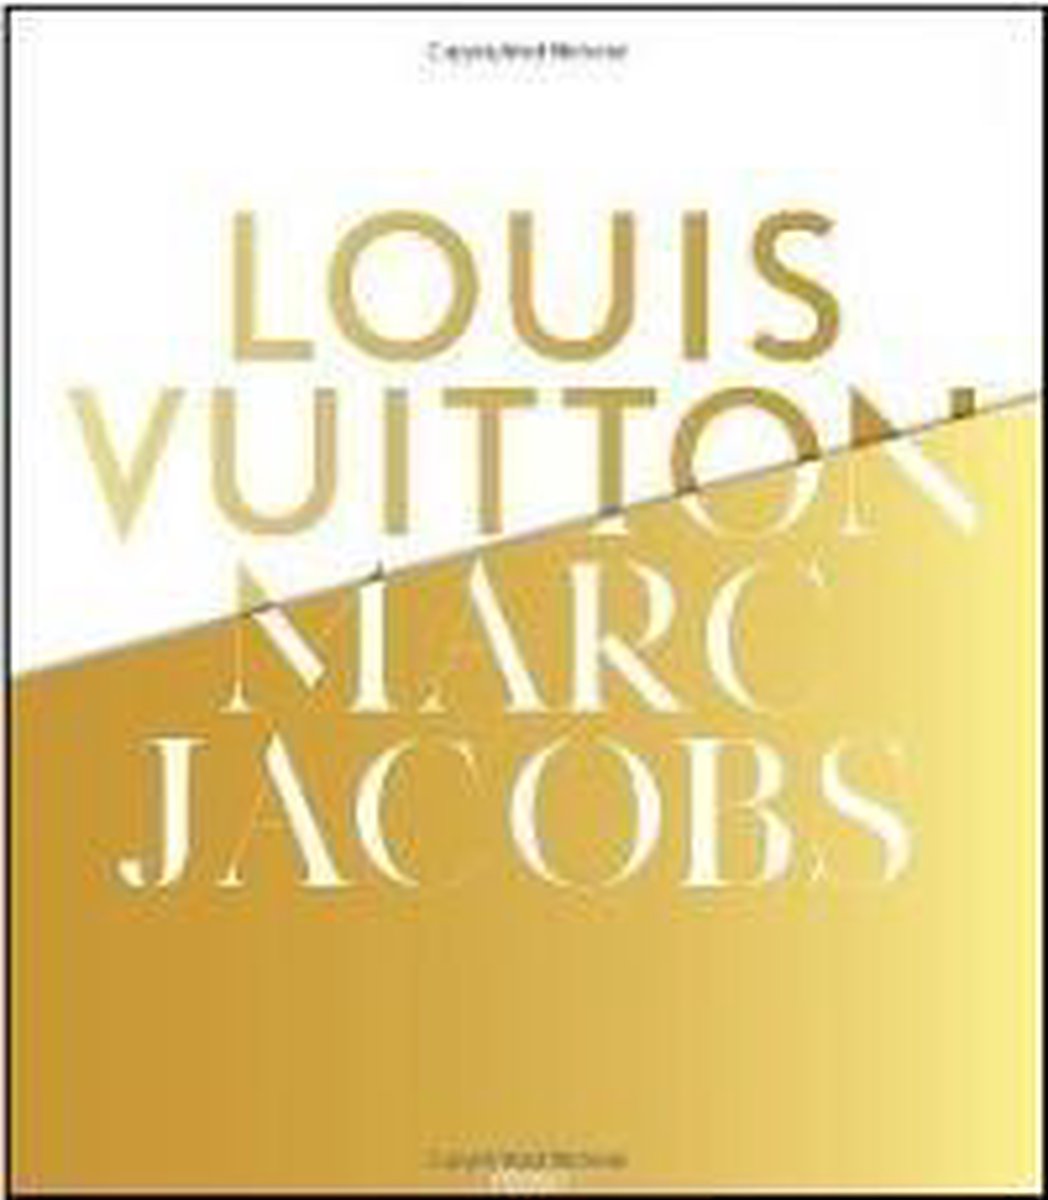 Louis Vuitton Marc Jacobs - Pamela Golbin